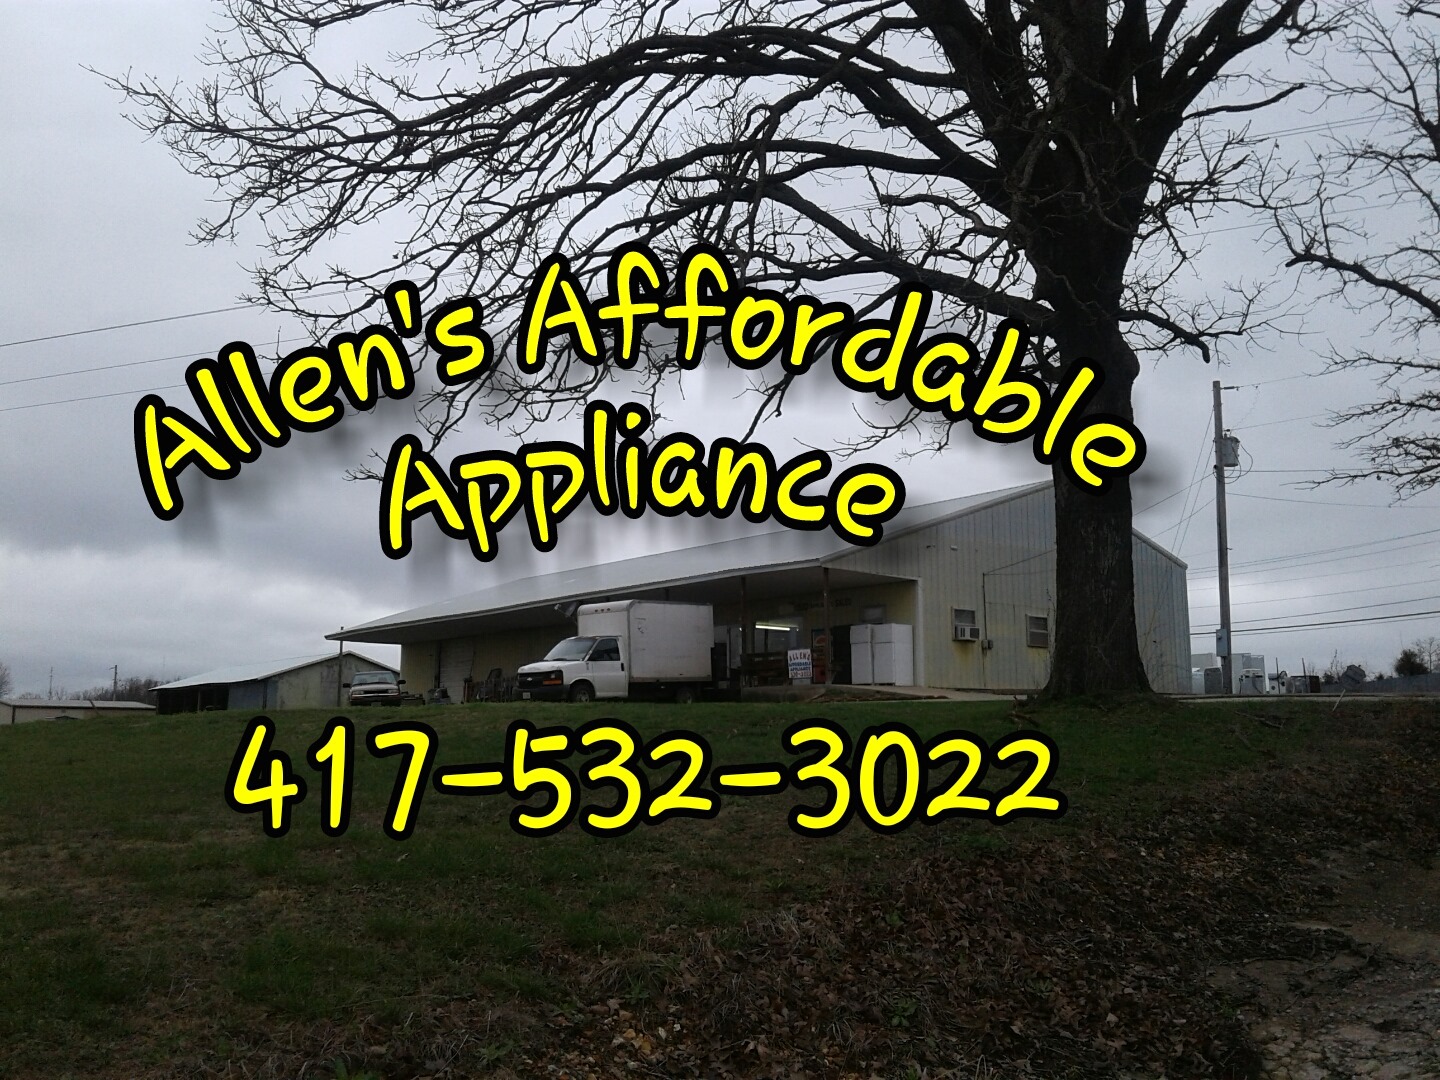 Allen’s Affordable Appliance